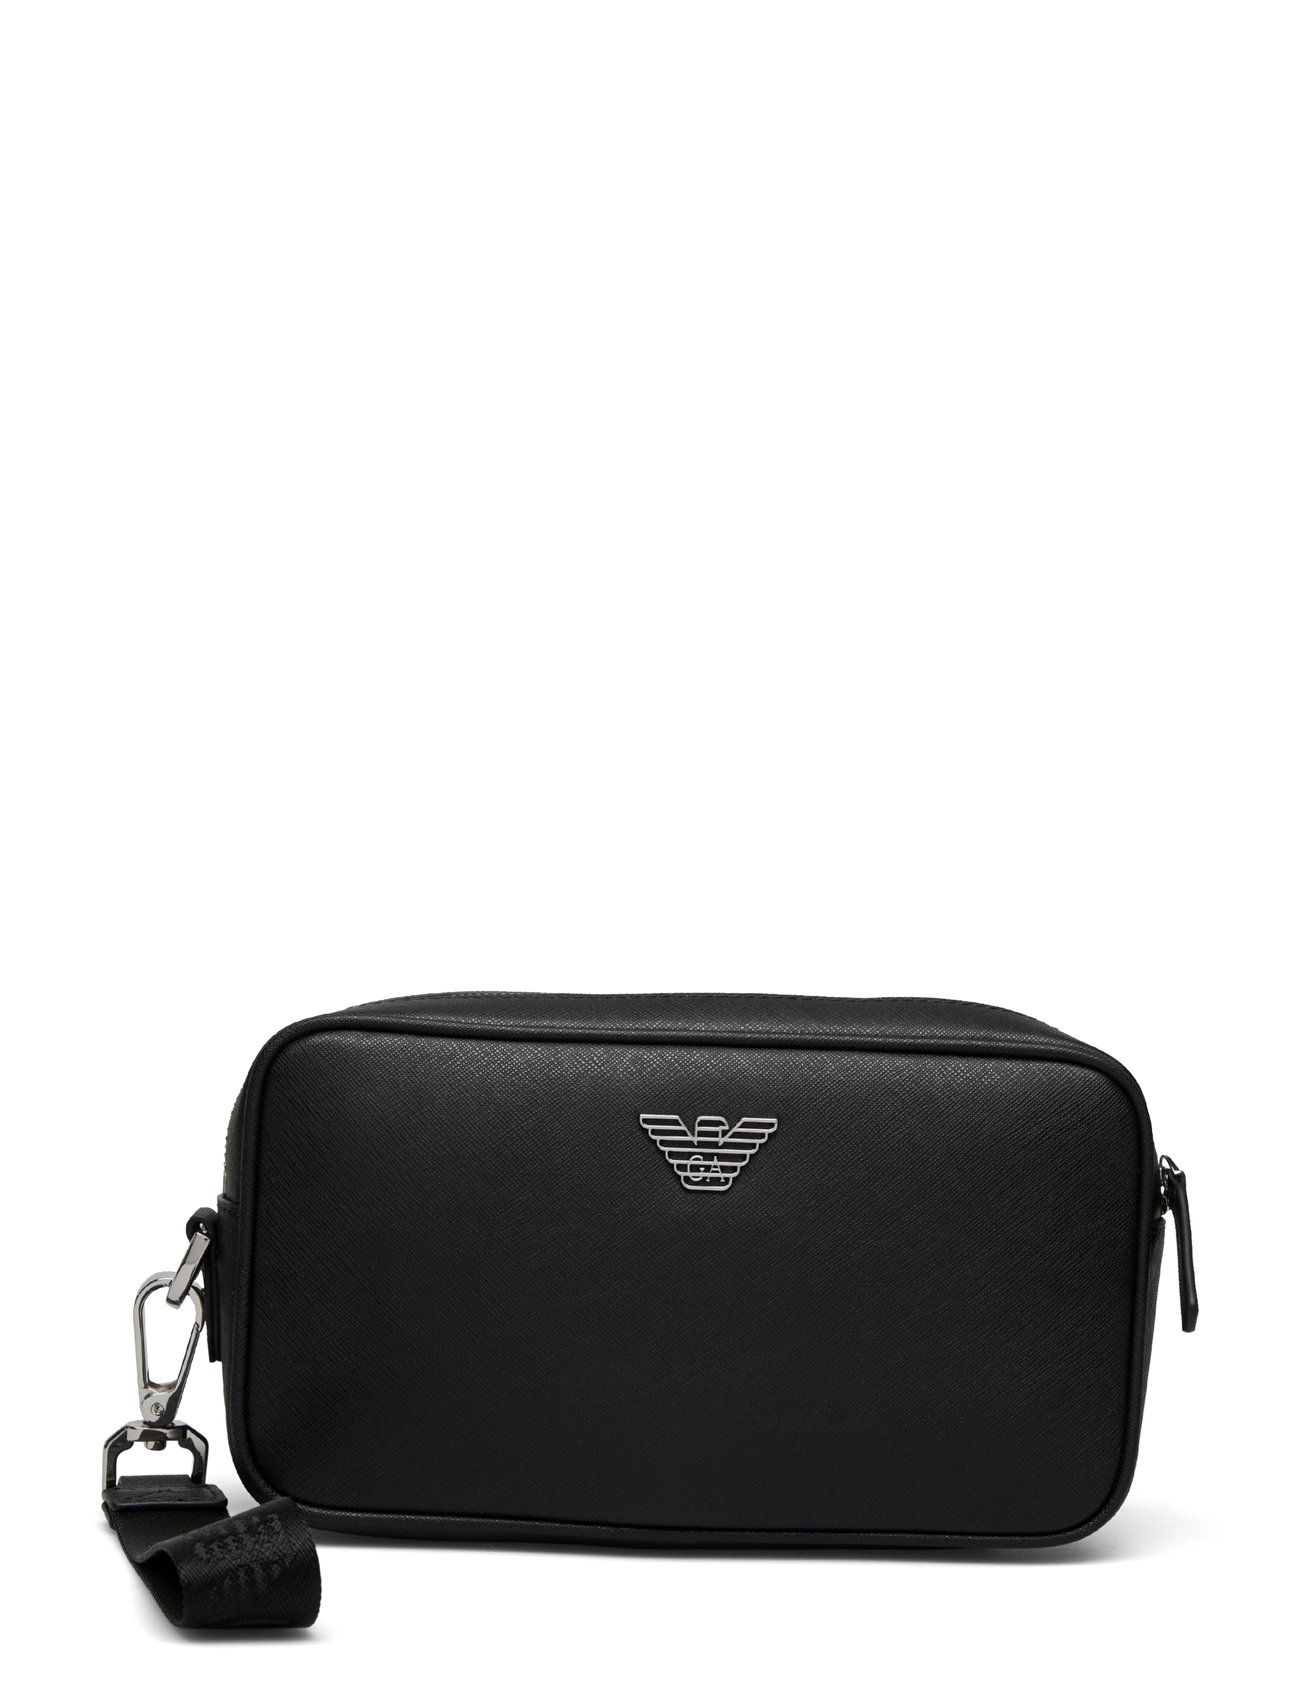 Beauty Case Designers Toiletry Bags Black Emporio Armani